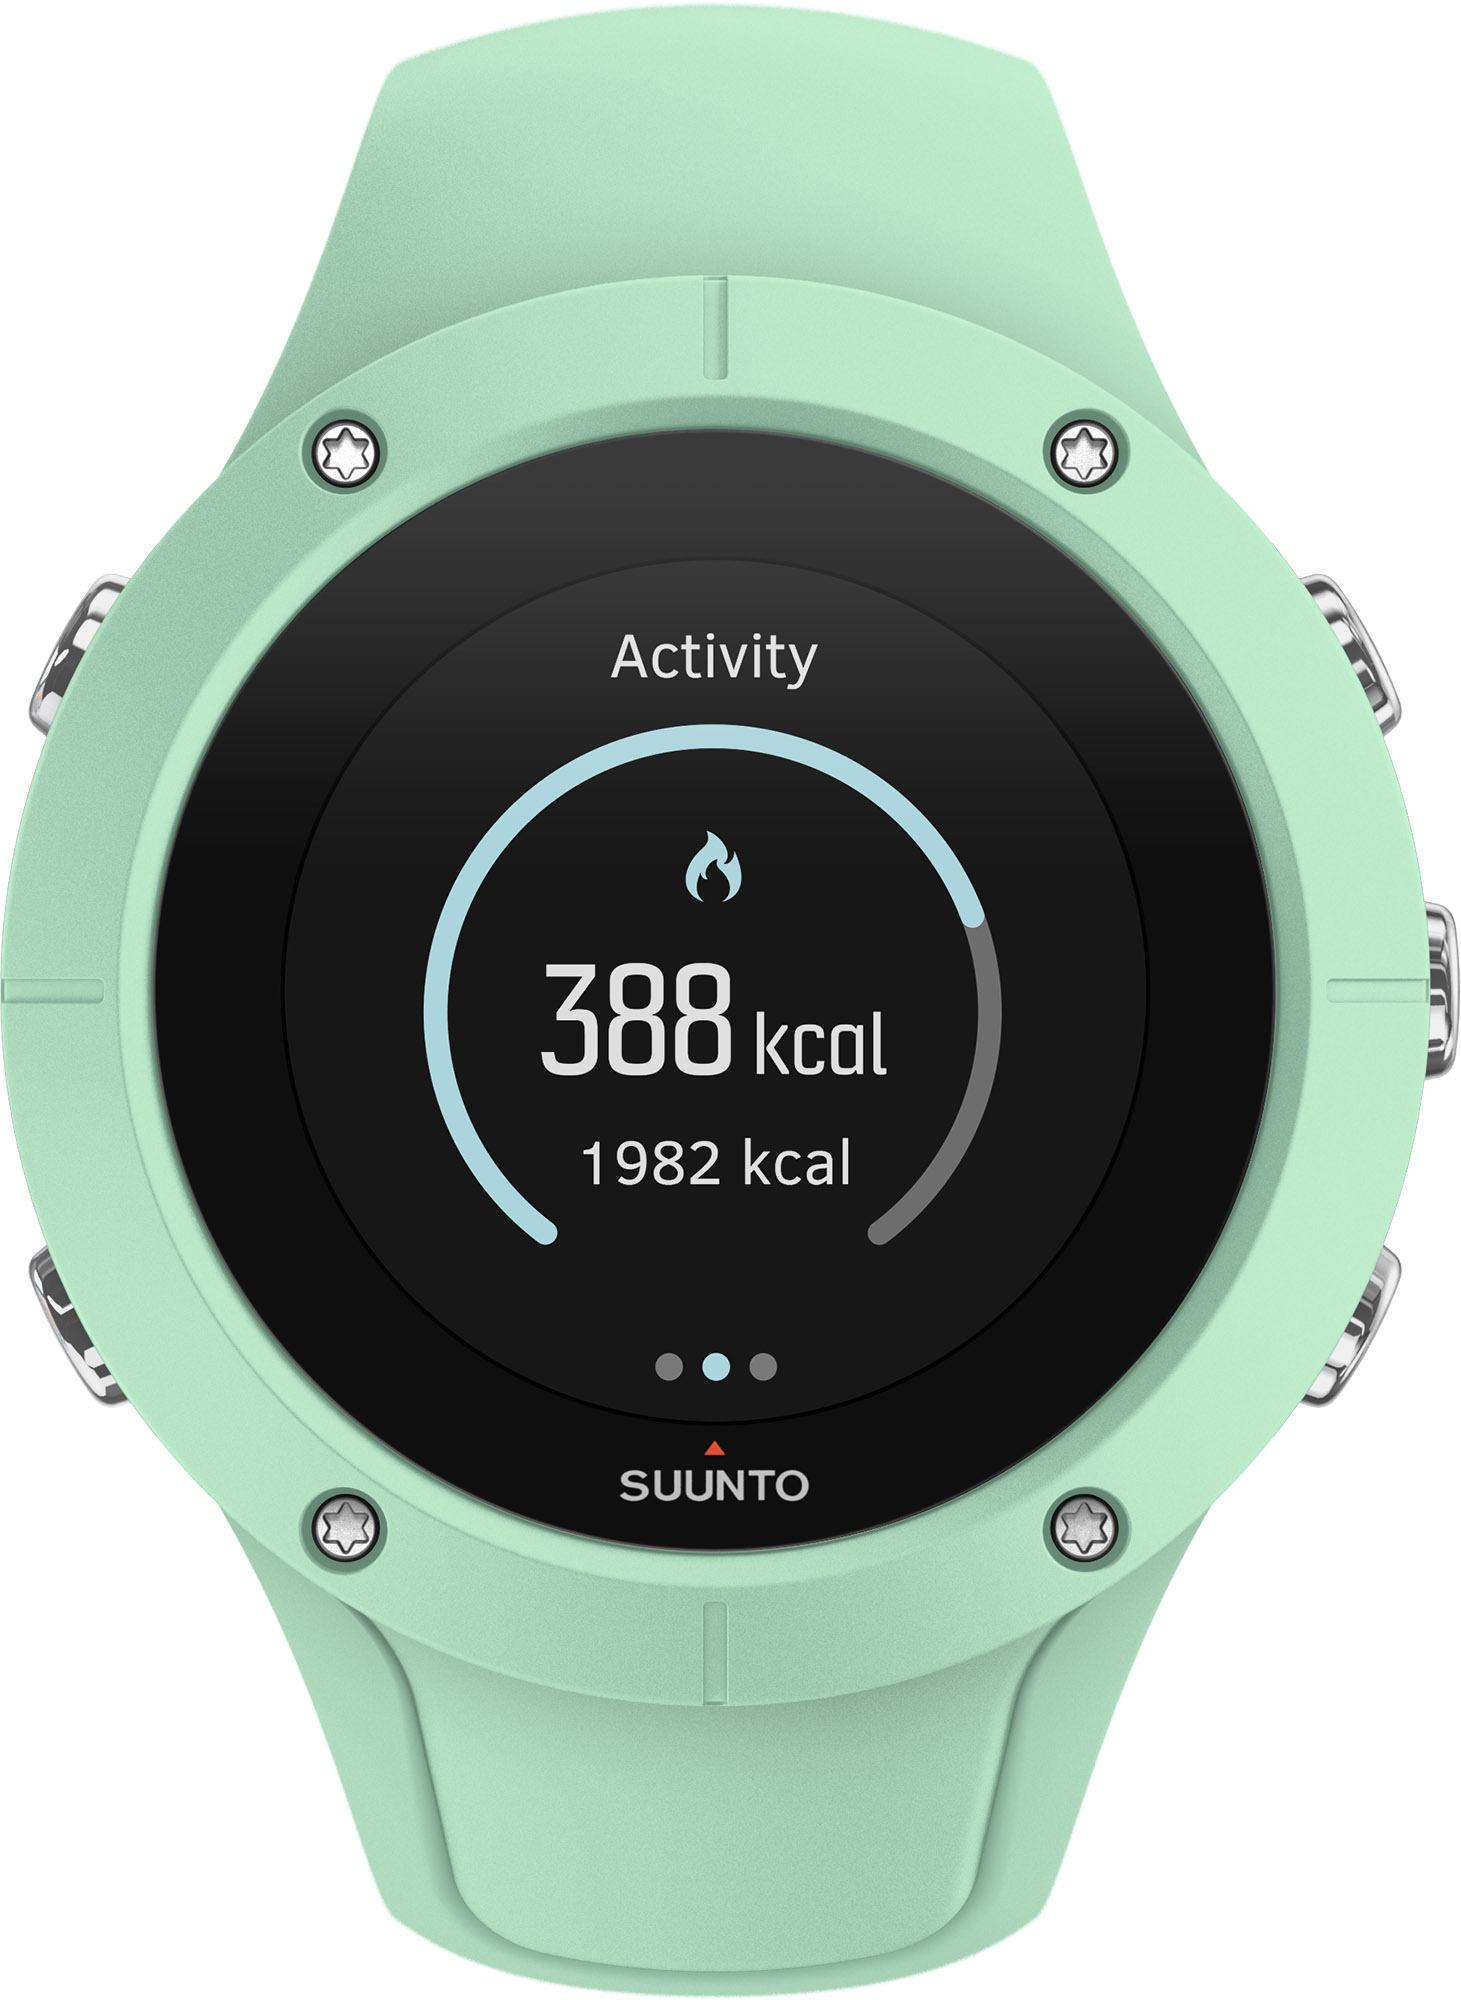 Lightweight multi-sports watch with GPS